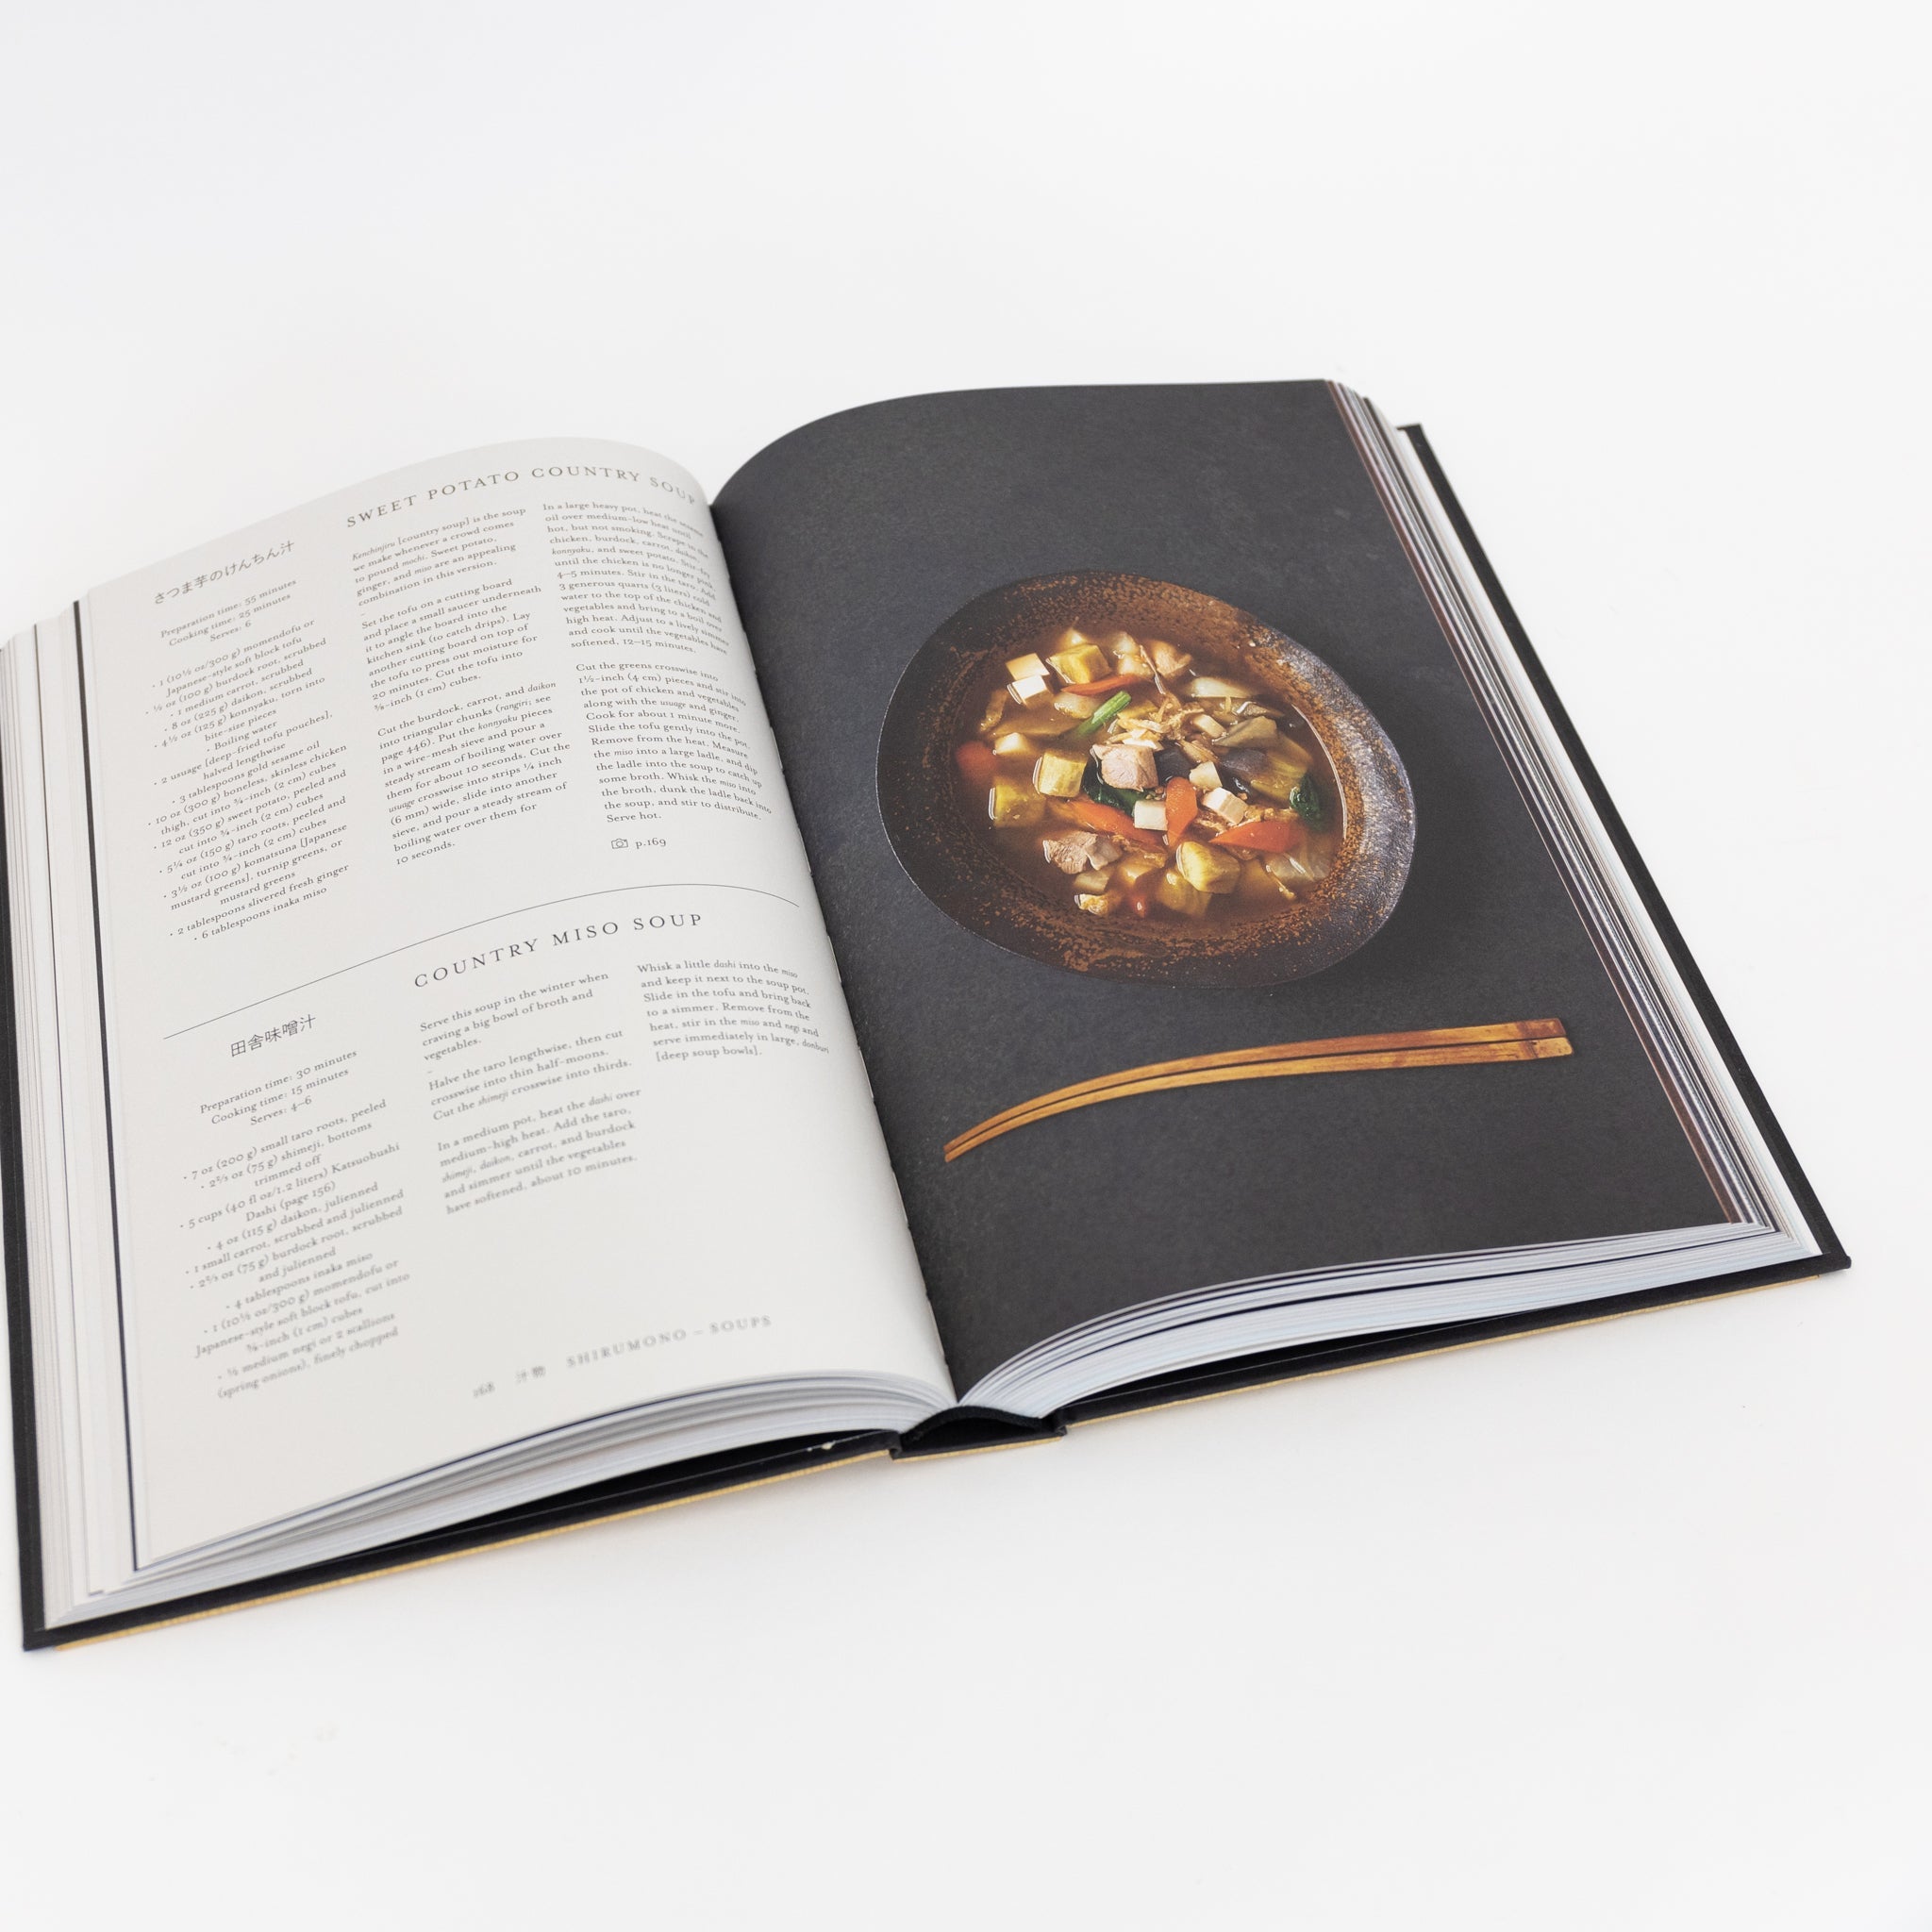 Japan: The Cookbook by Nancy Singleton